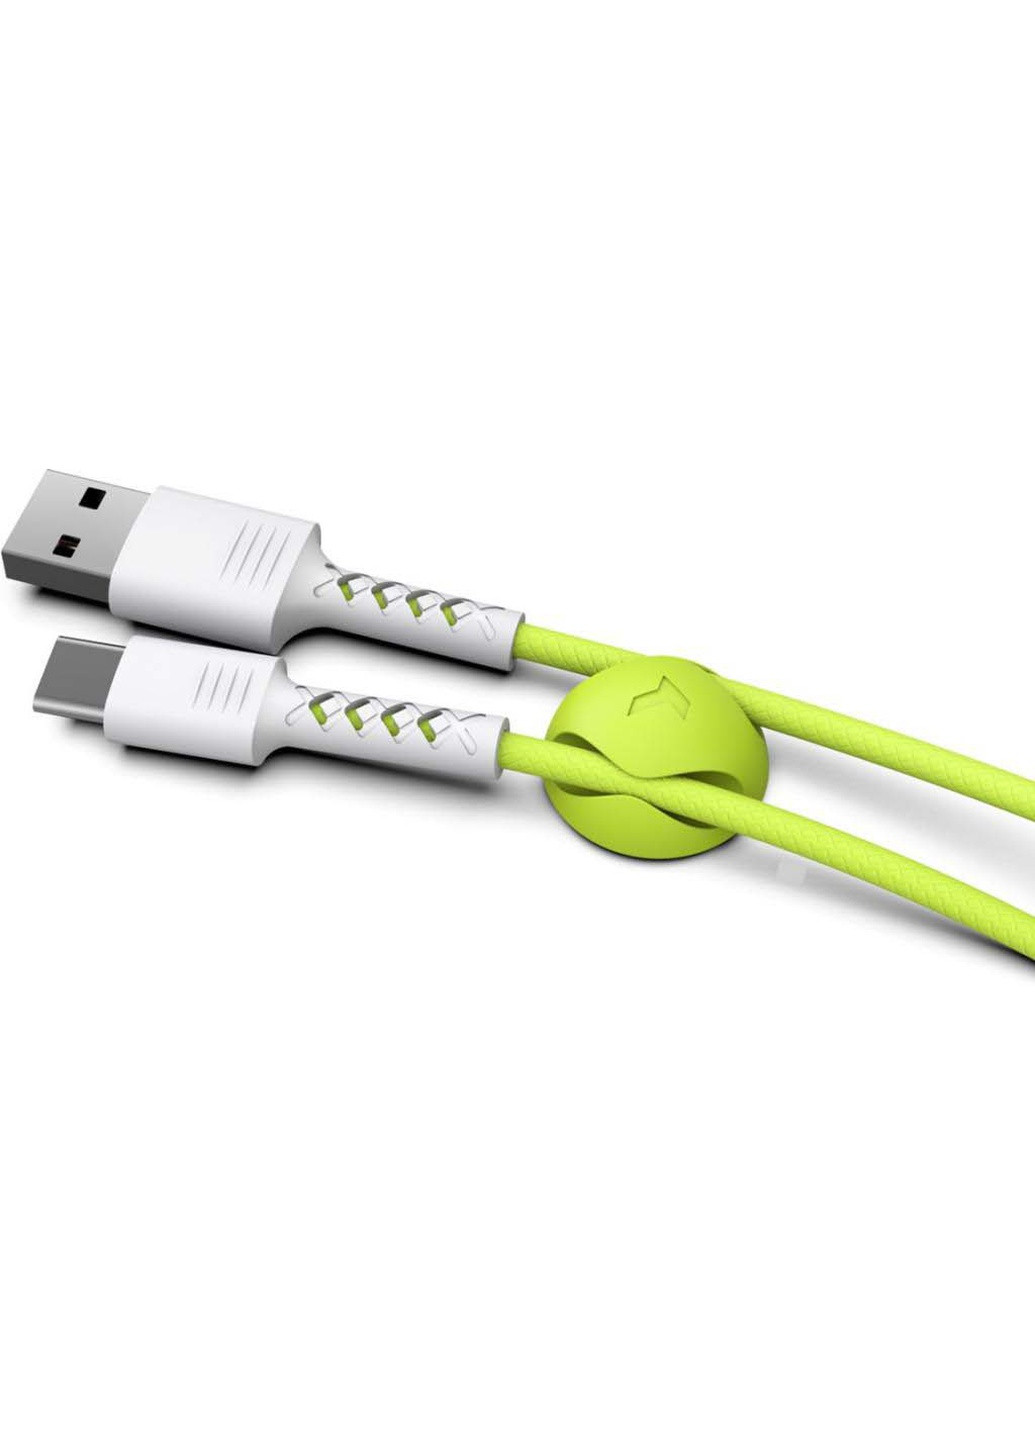 Дата кабель USB 2.0 AM to Type-C 1.0m Soft white / lime (4897058531169) Pixus usb 2.0 am to type-c 1.0m soft white/lime (239382799)